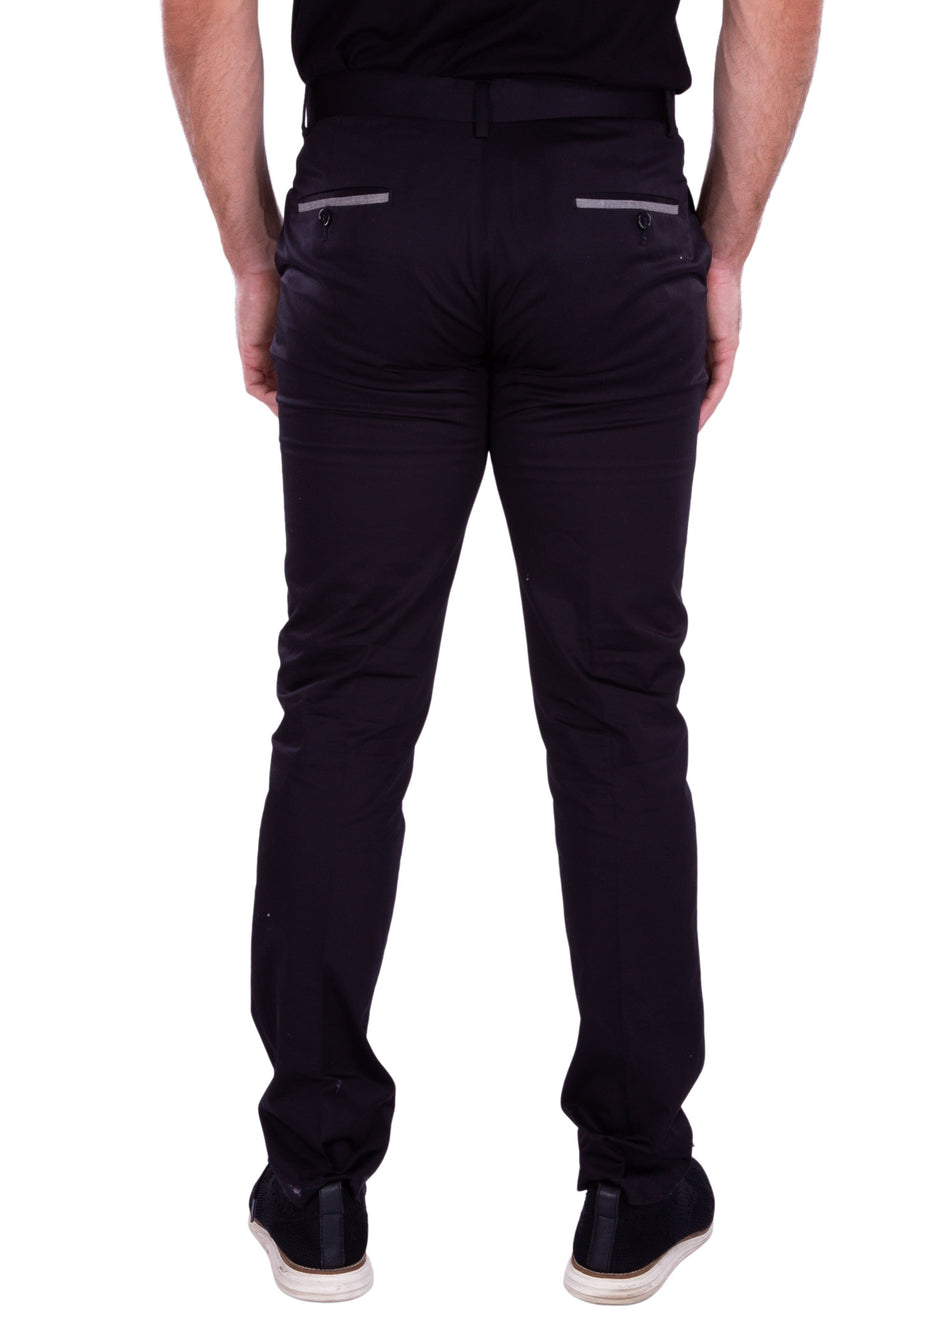 BESPOKE - Navy Pants for Men - 183122 - www.